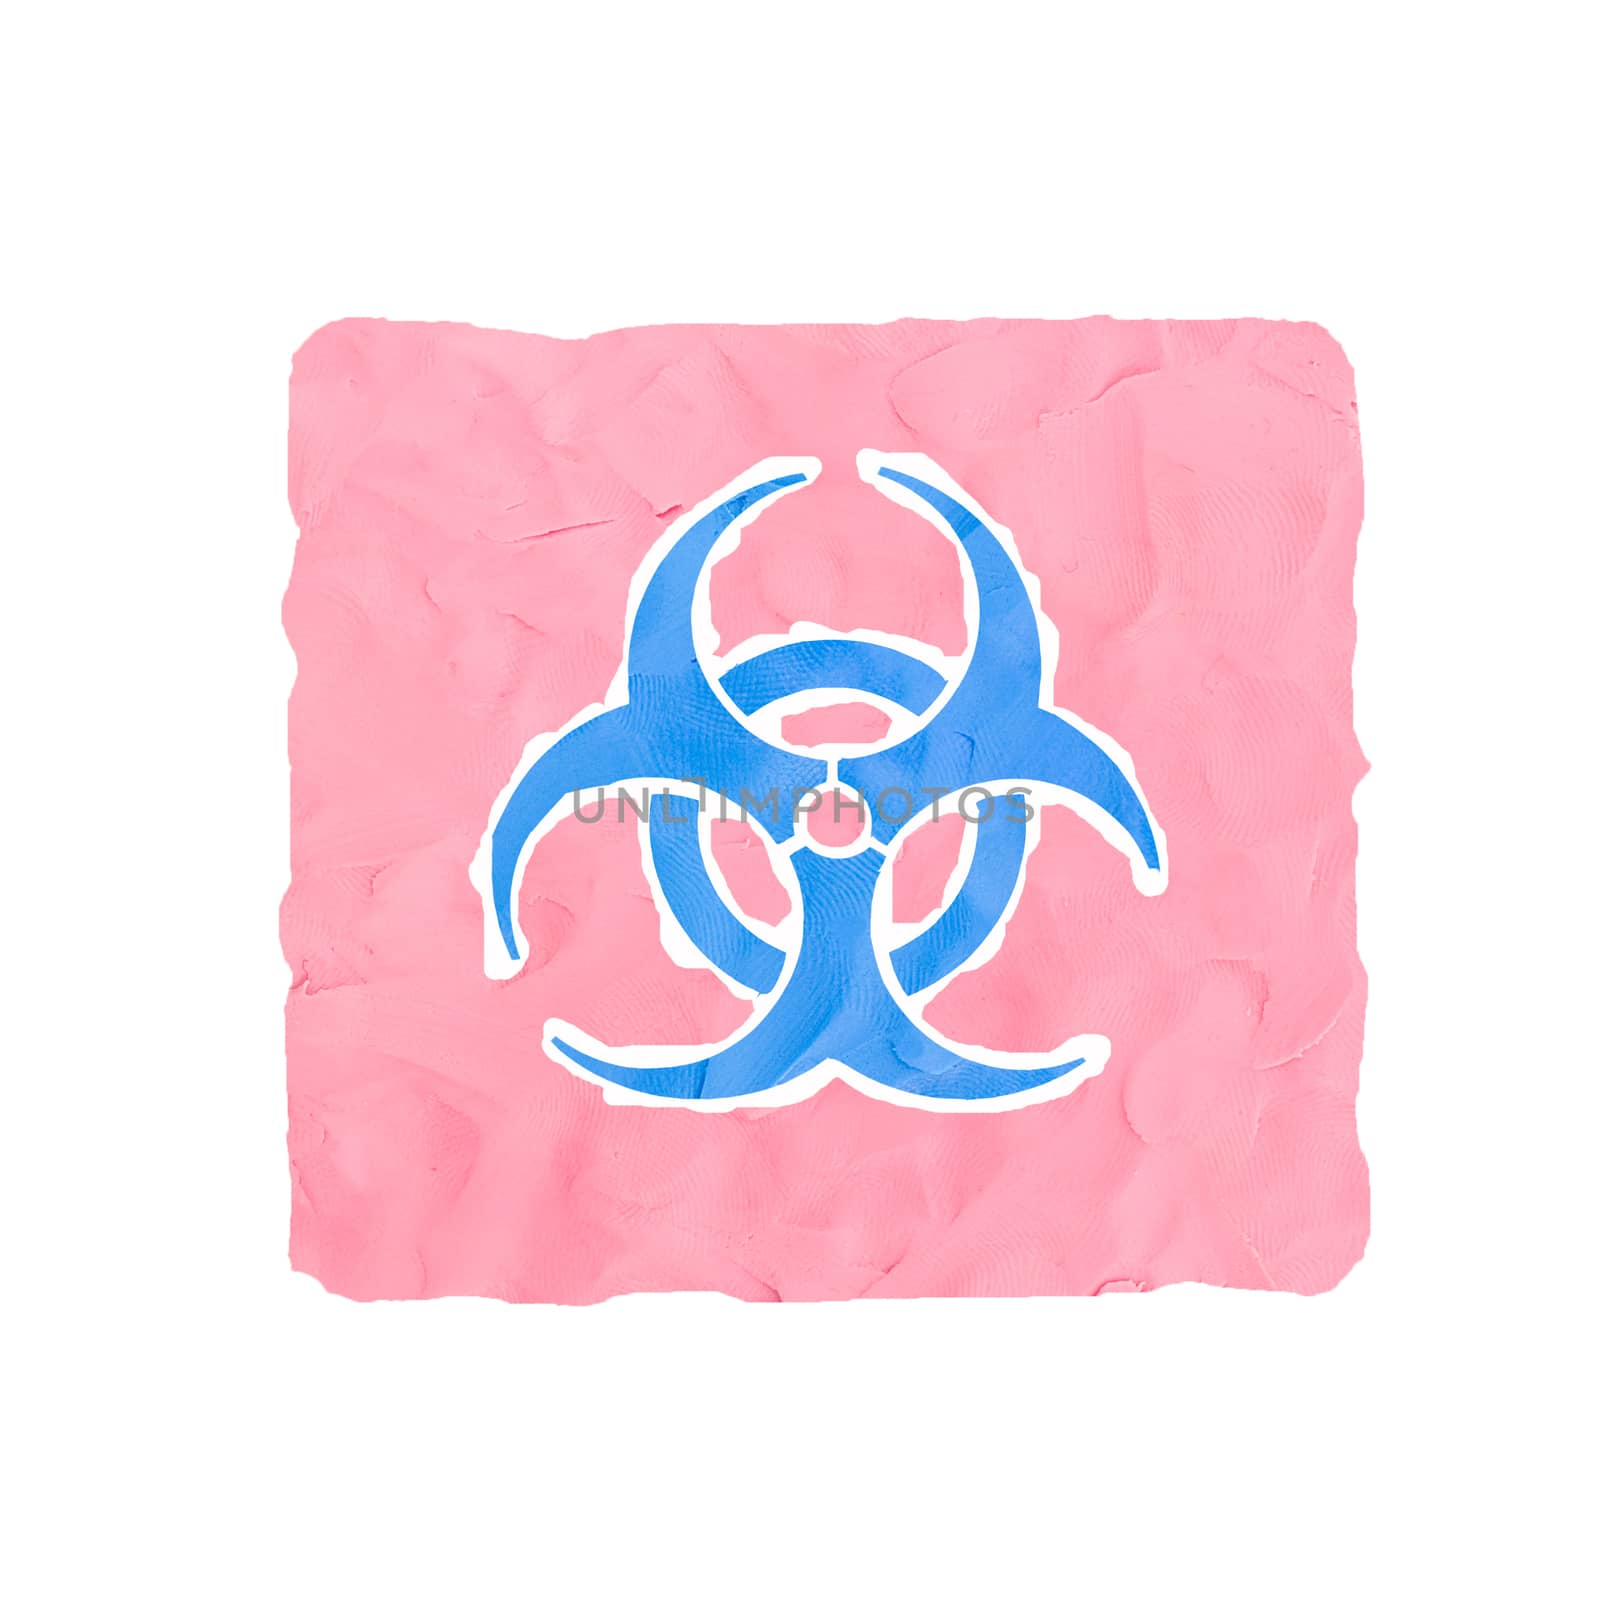 biohazard icon handmade isolated on white background by tisskananat